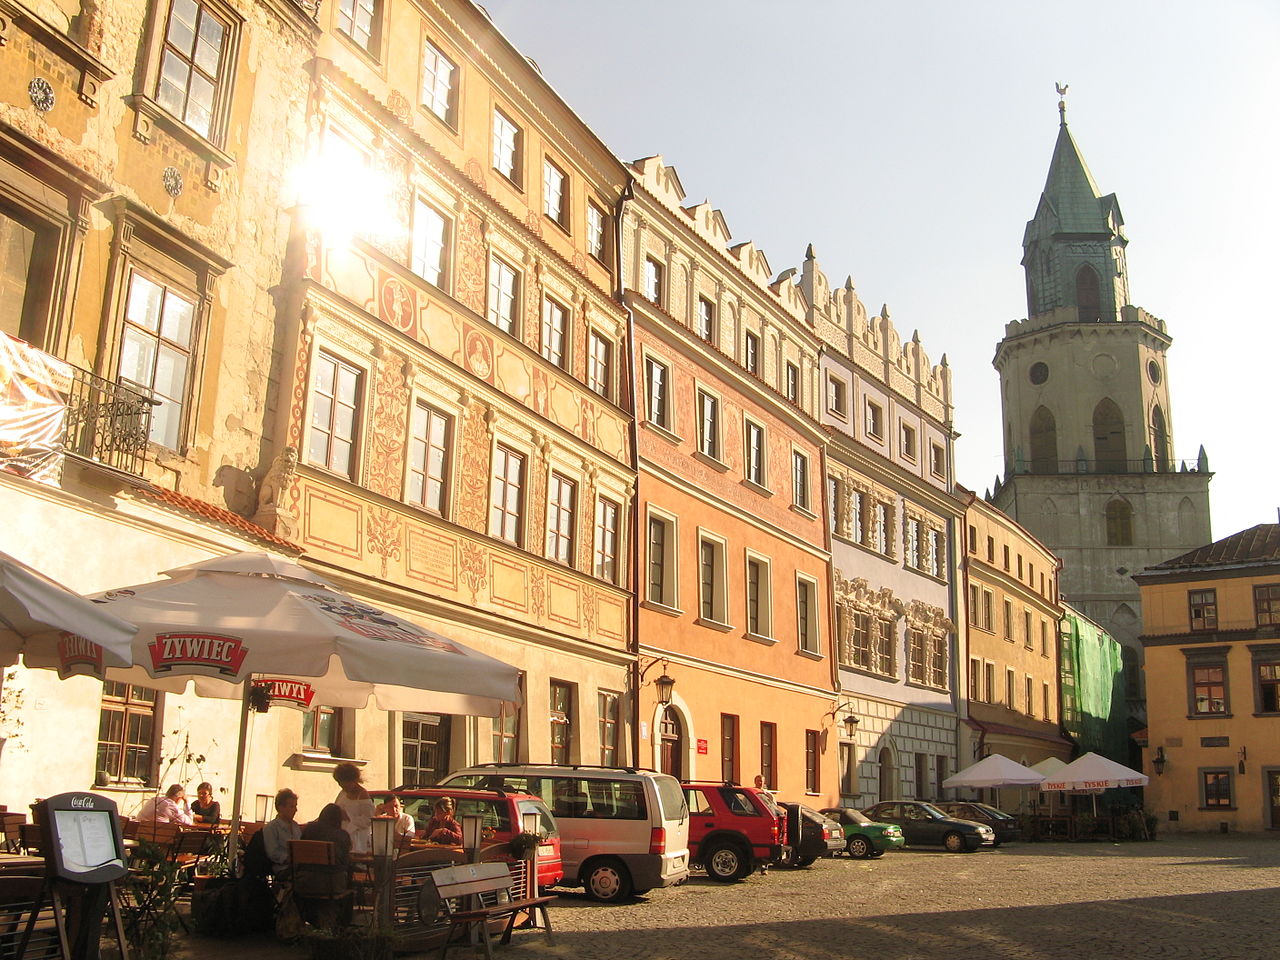 Lublino, in polacco Lublin, in Polonia